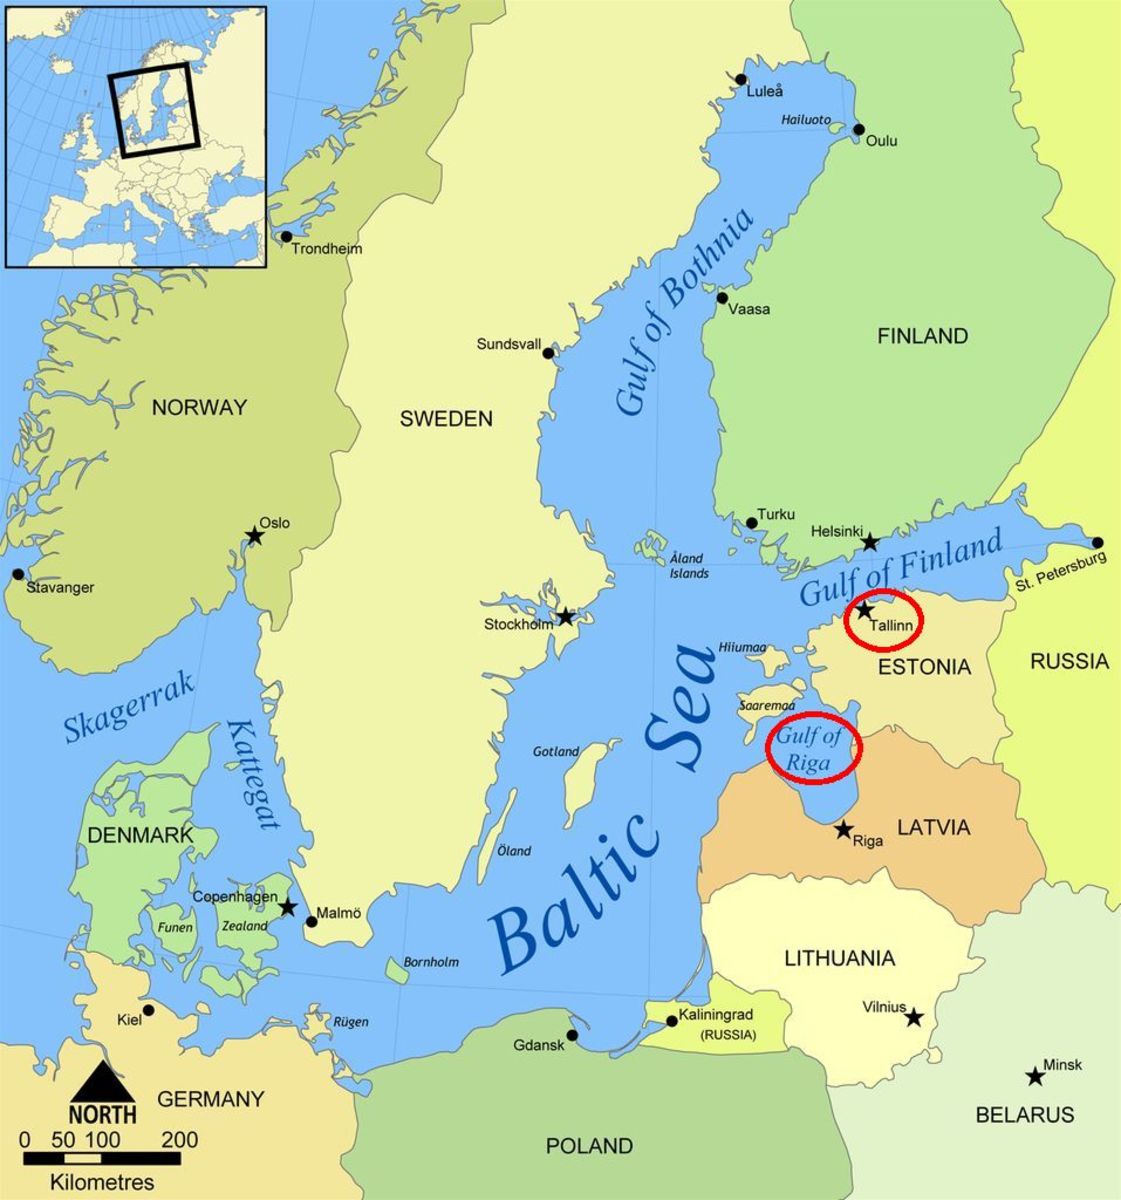 The Baltic Sea, showing the location of Tallin, Estonia and the Gulf of Riga.